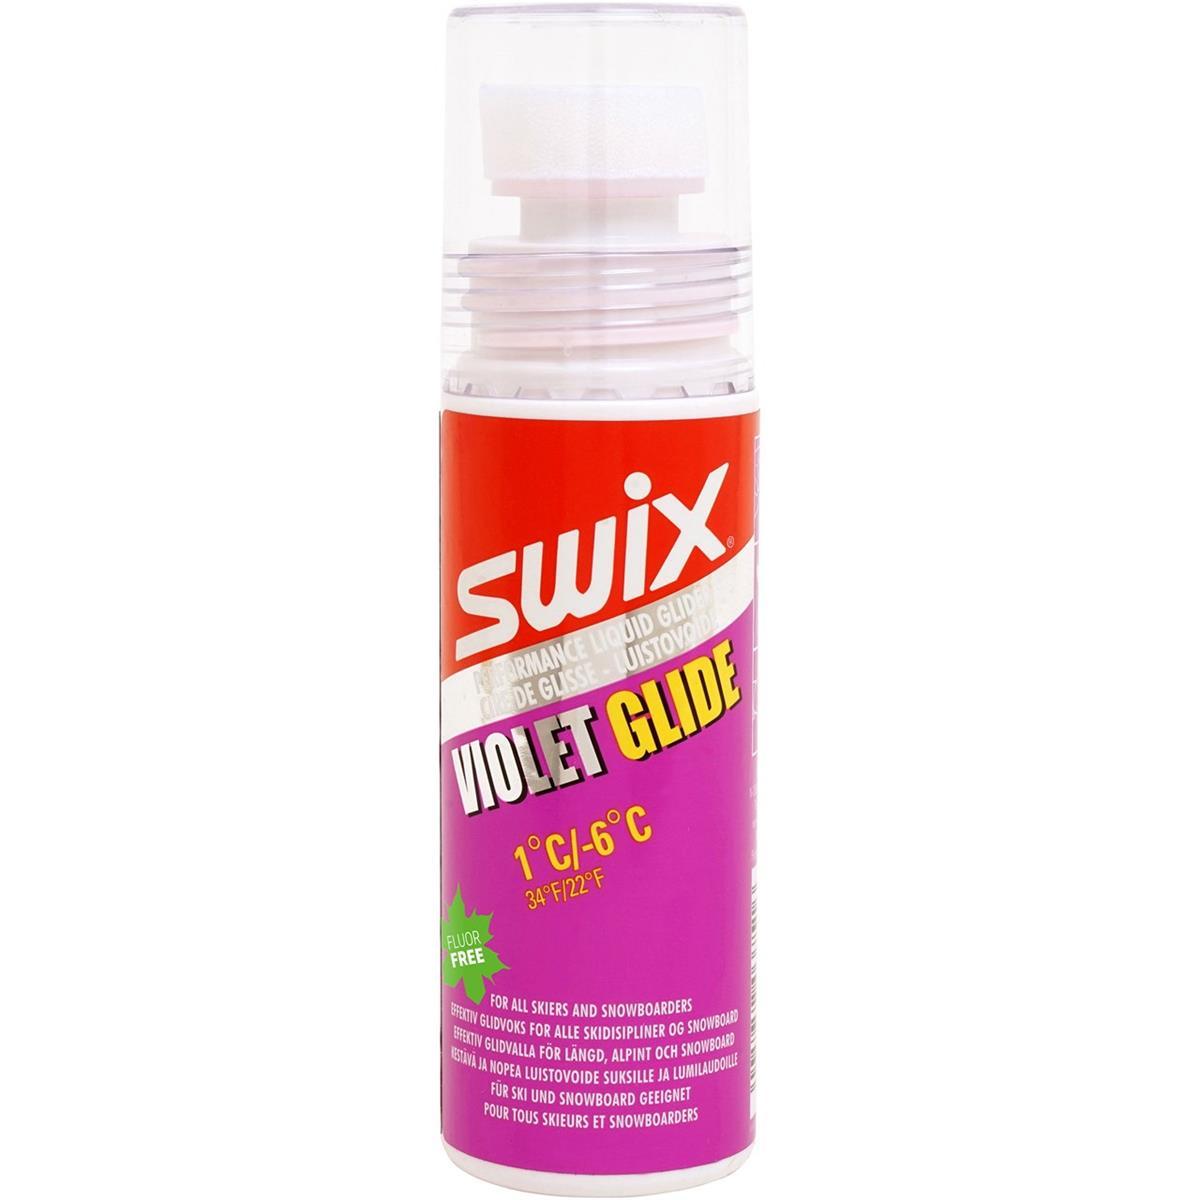 Swix F7LNC Violet liquid glide 1/-6°C, 80ml